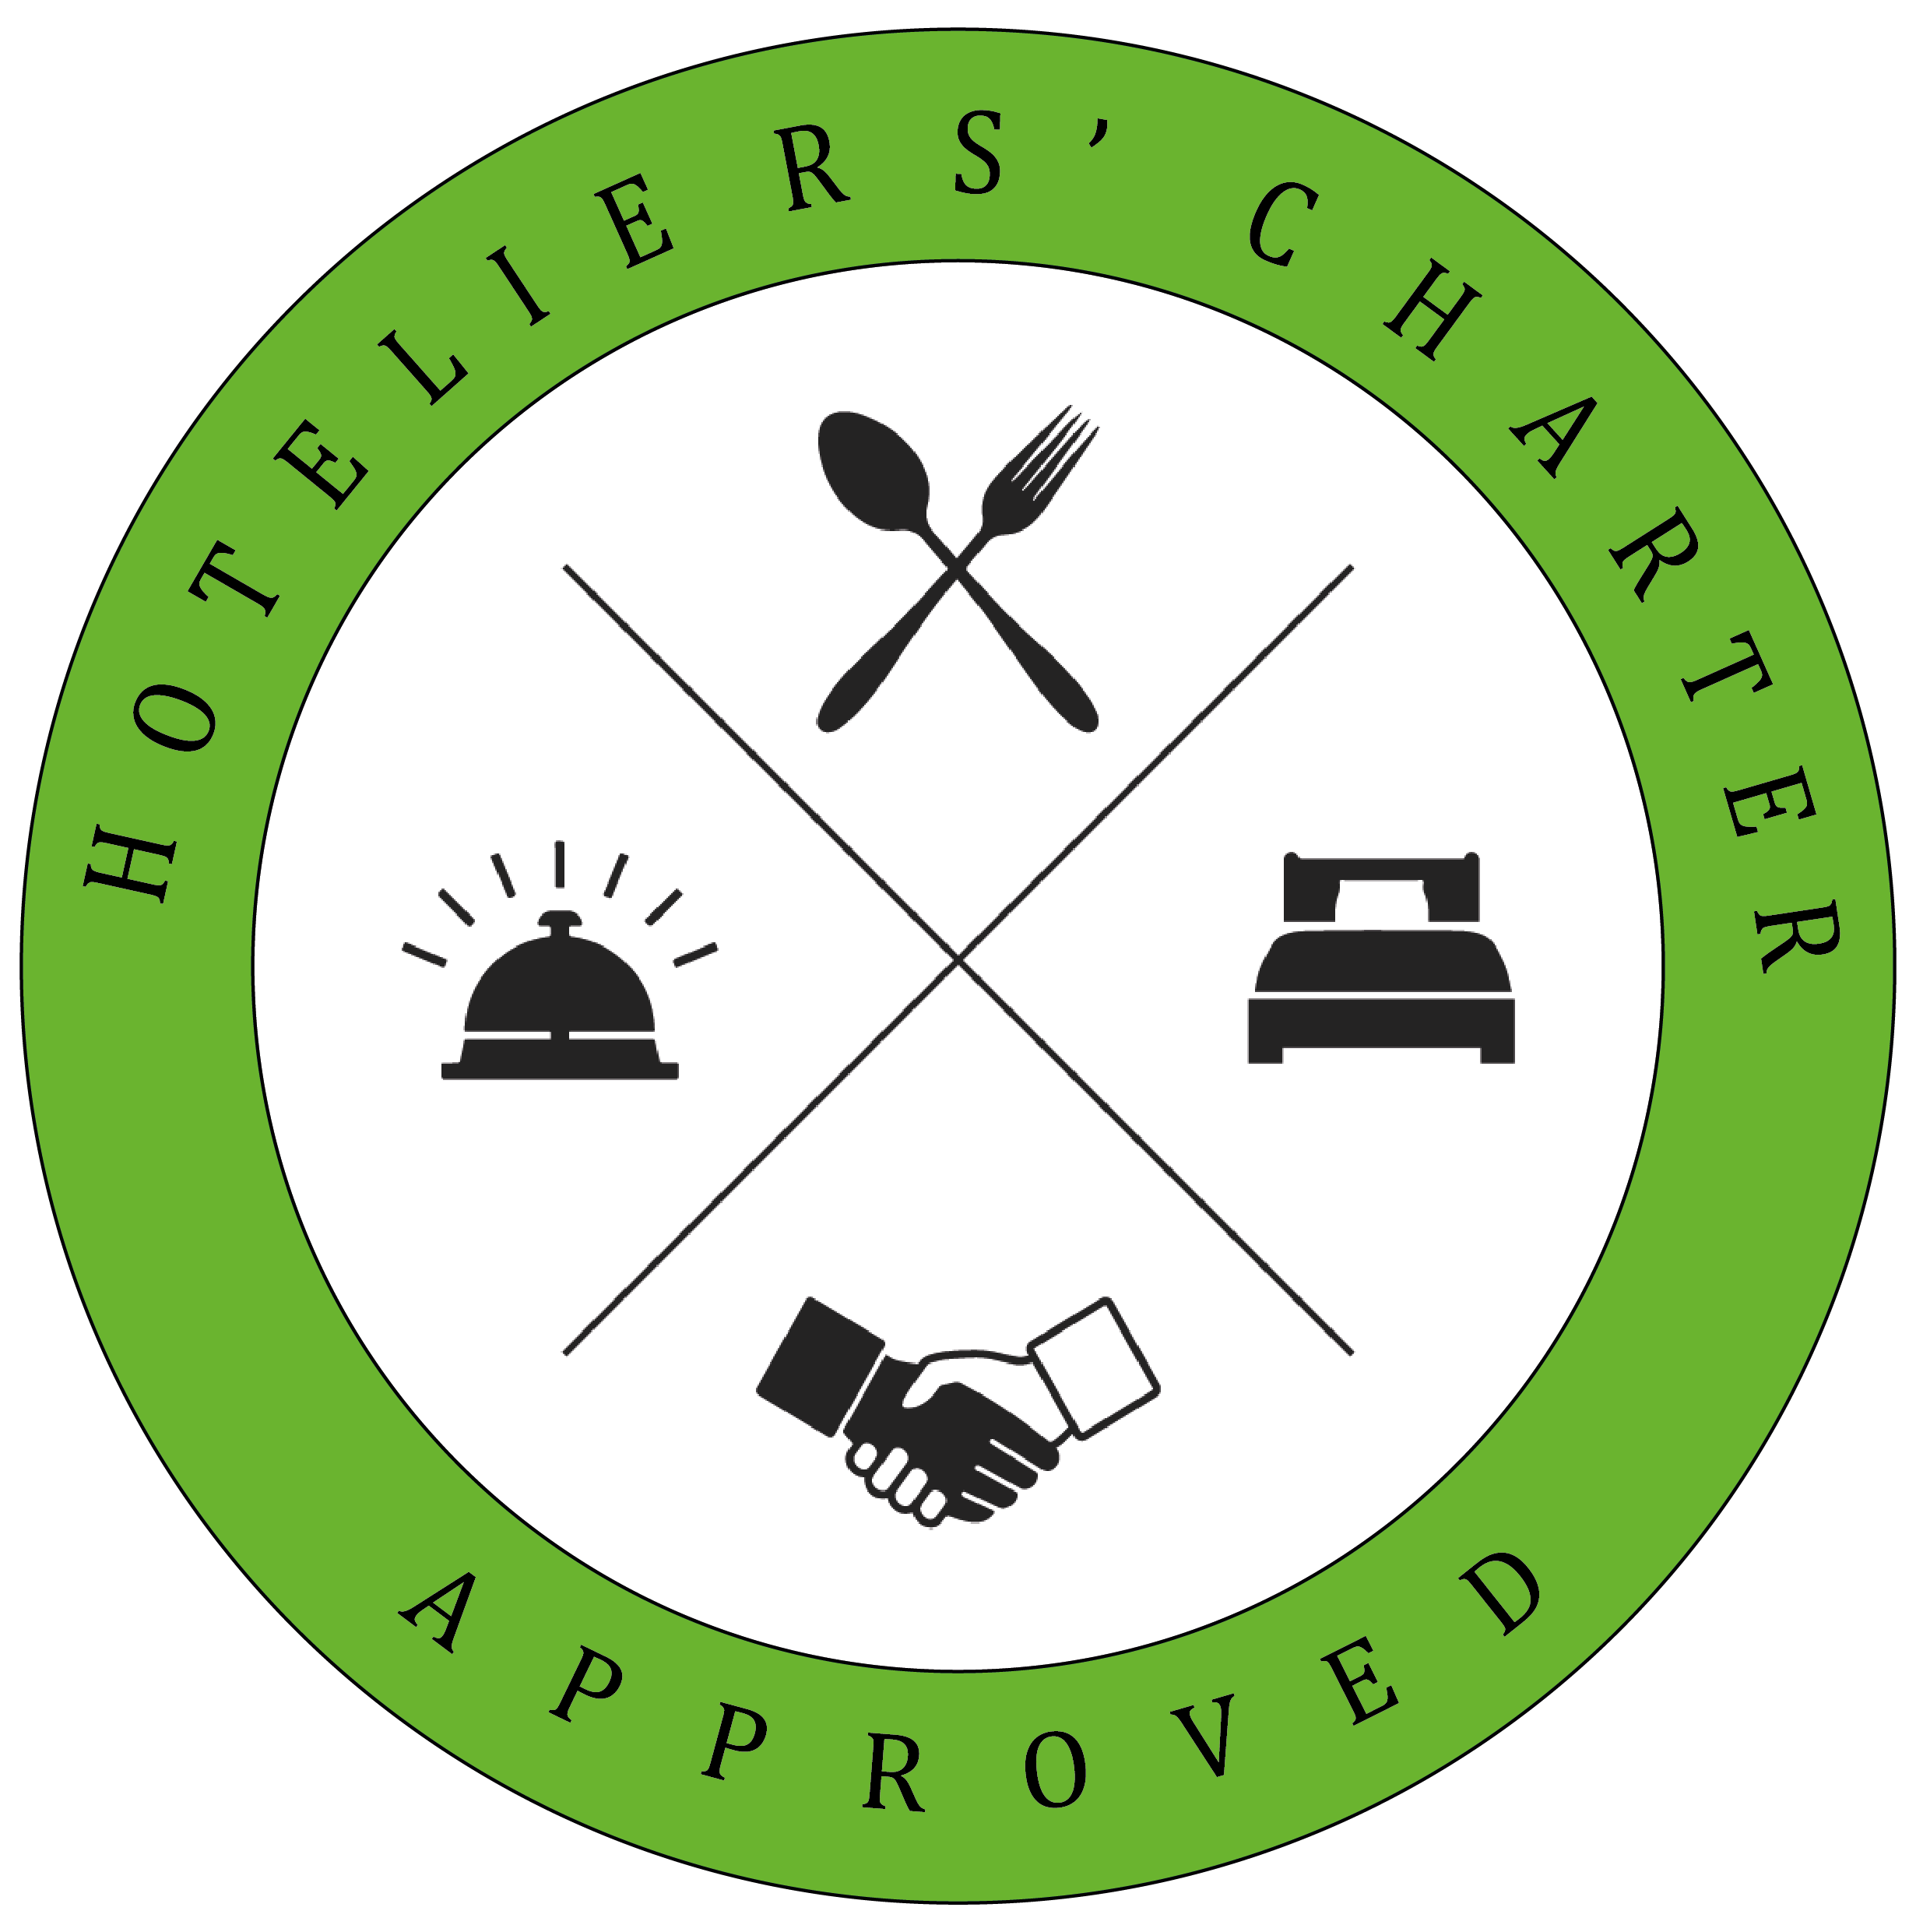 hoteliers' charter logo